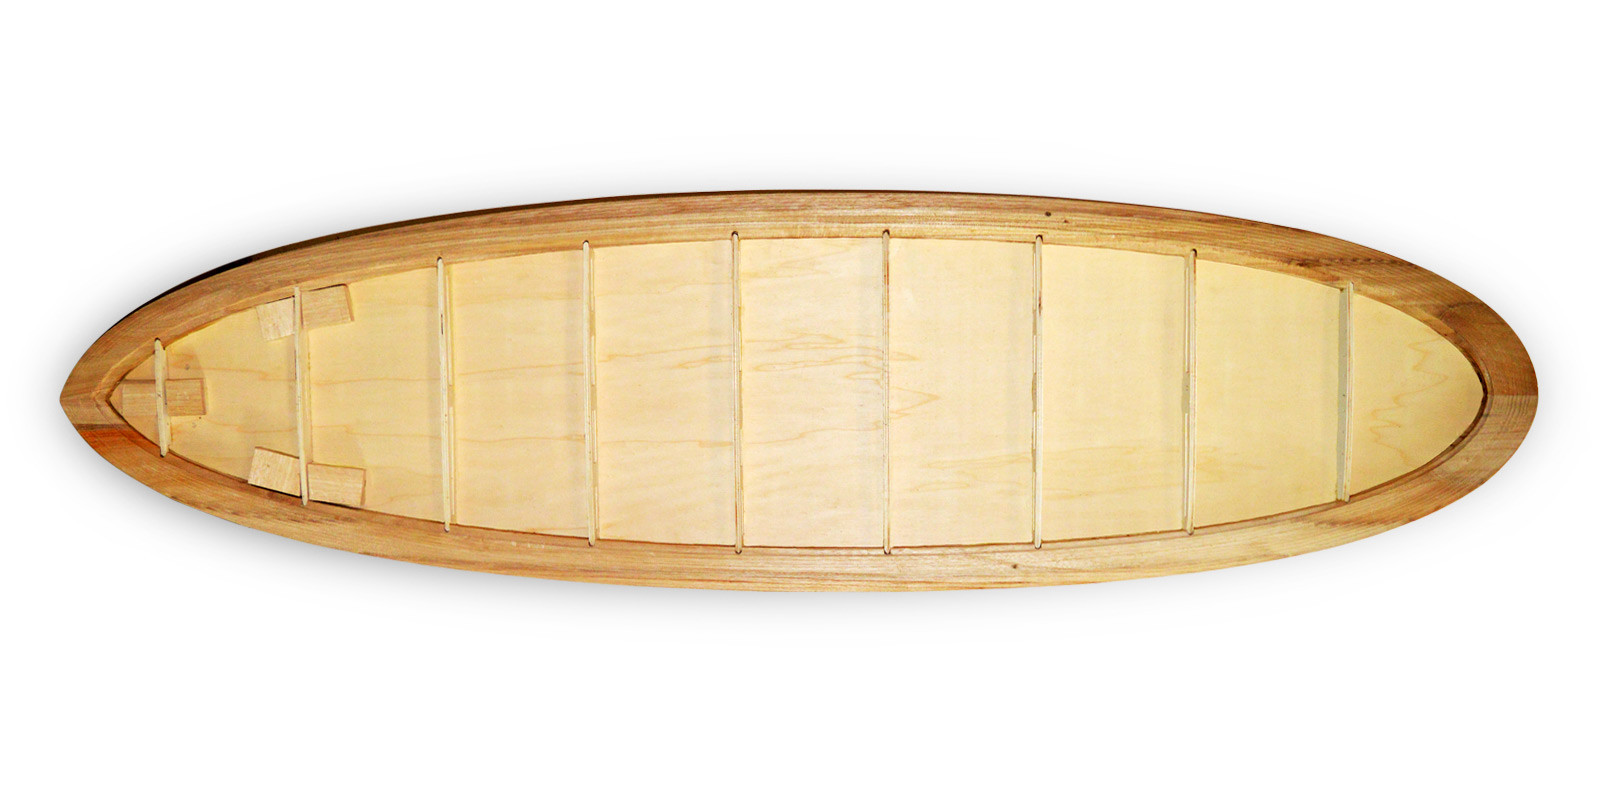 DIY Wood Surfboard
 DIY WOODEN SURFBOARD KIT No Made Boards wooden surfboard